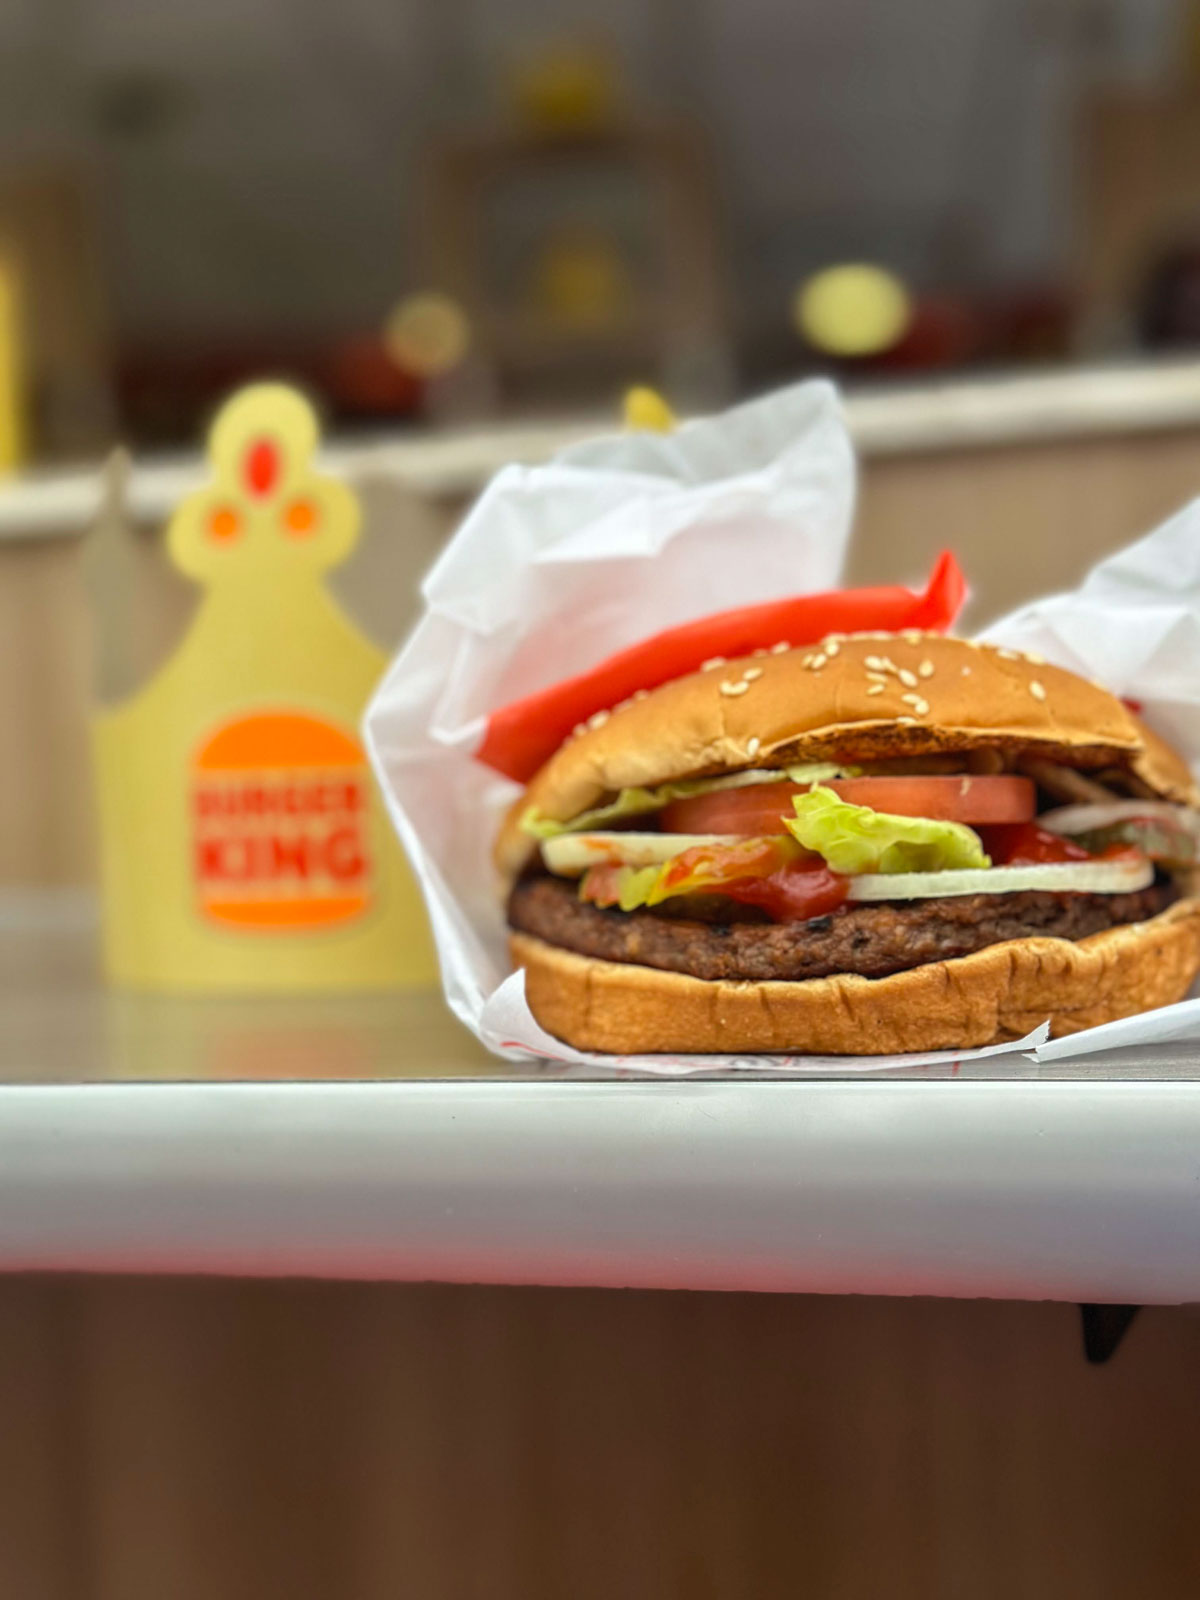 The vegan Impossible Burger at Burger King.